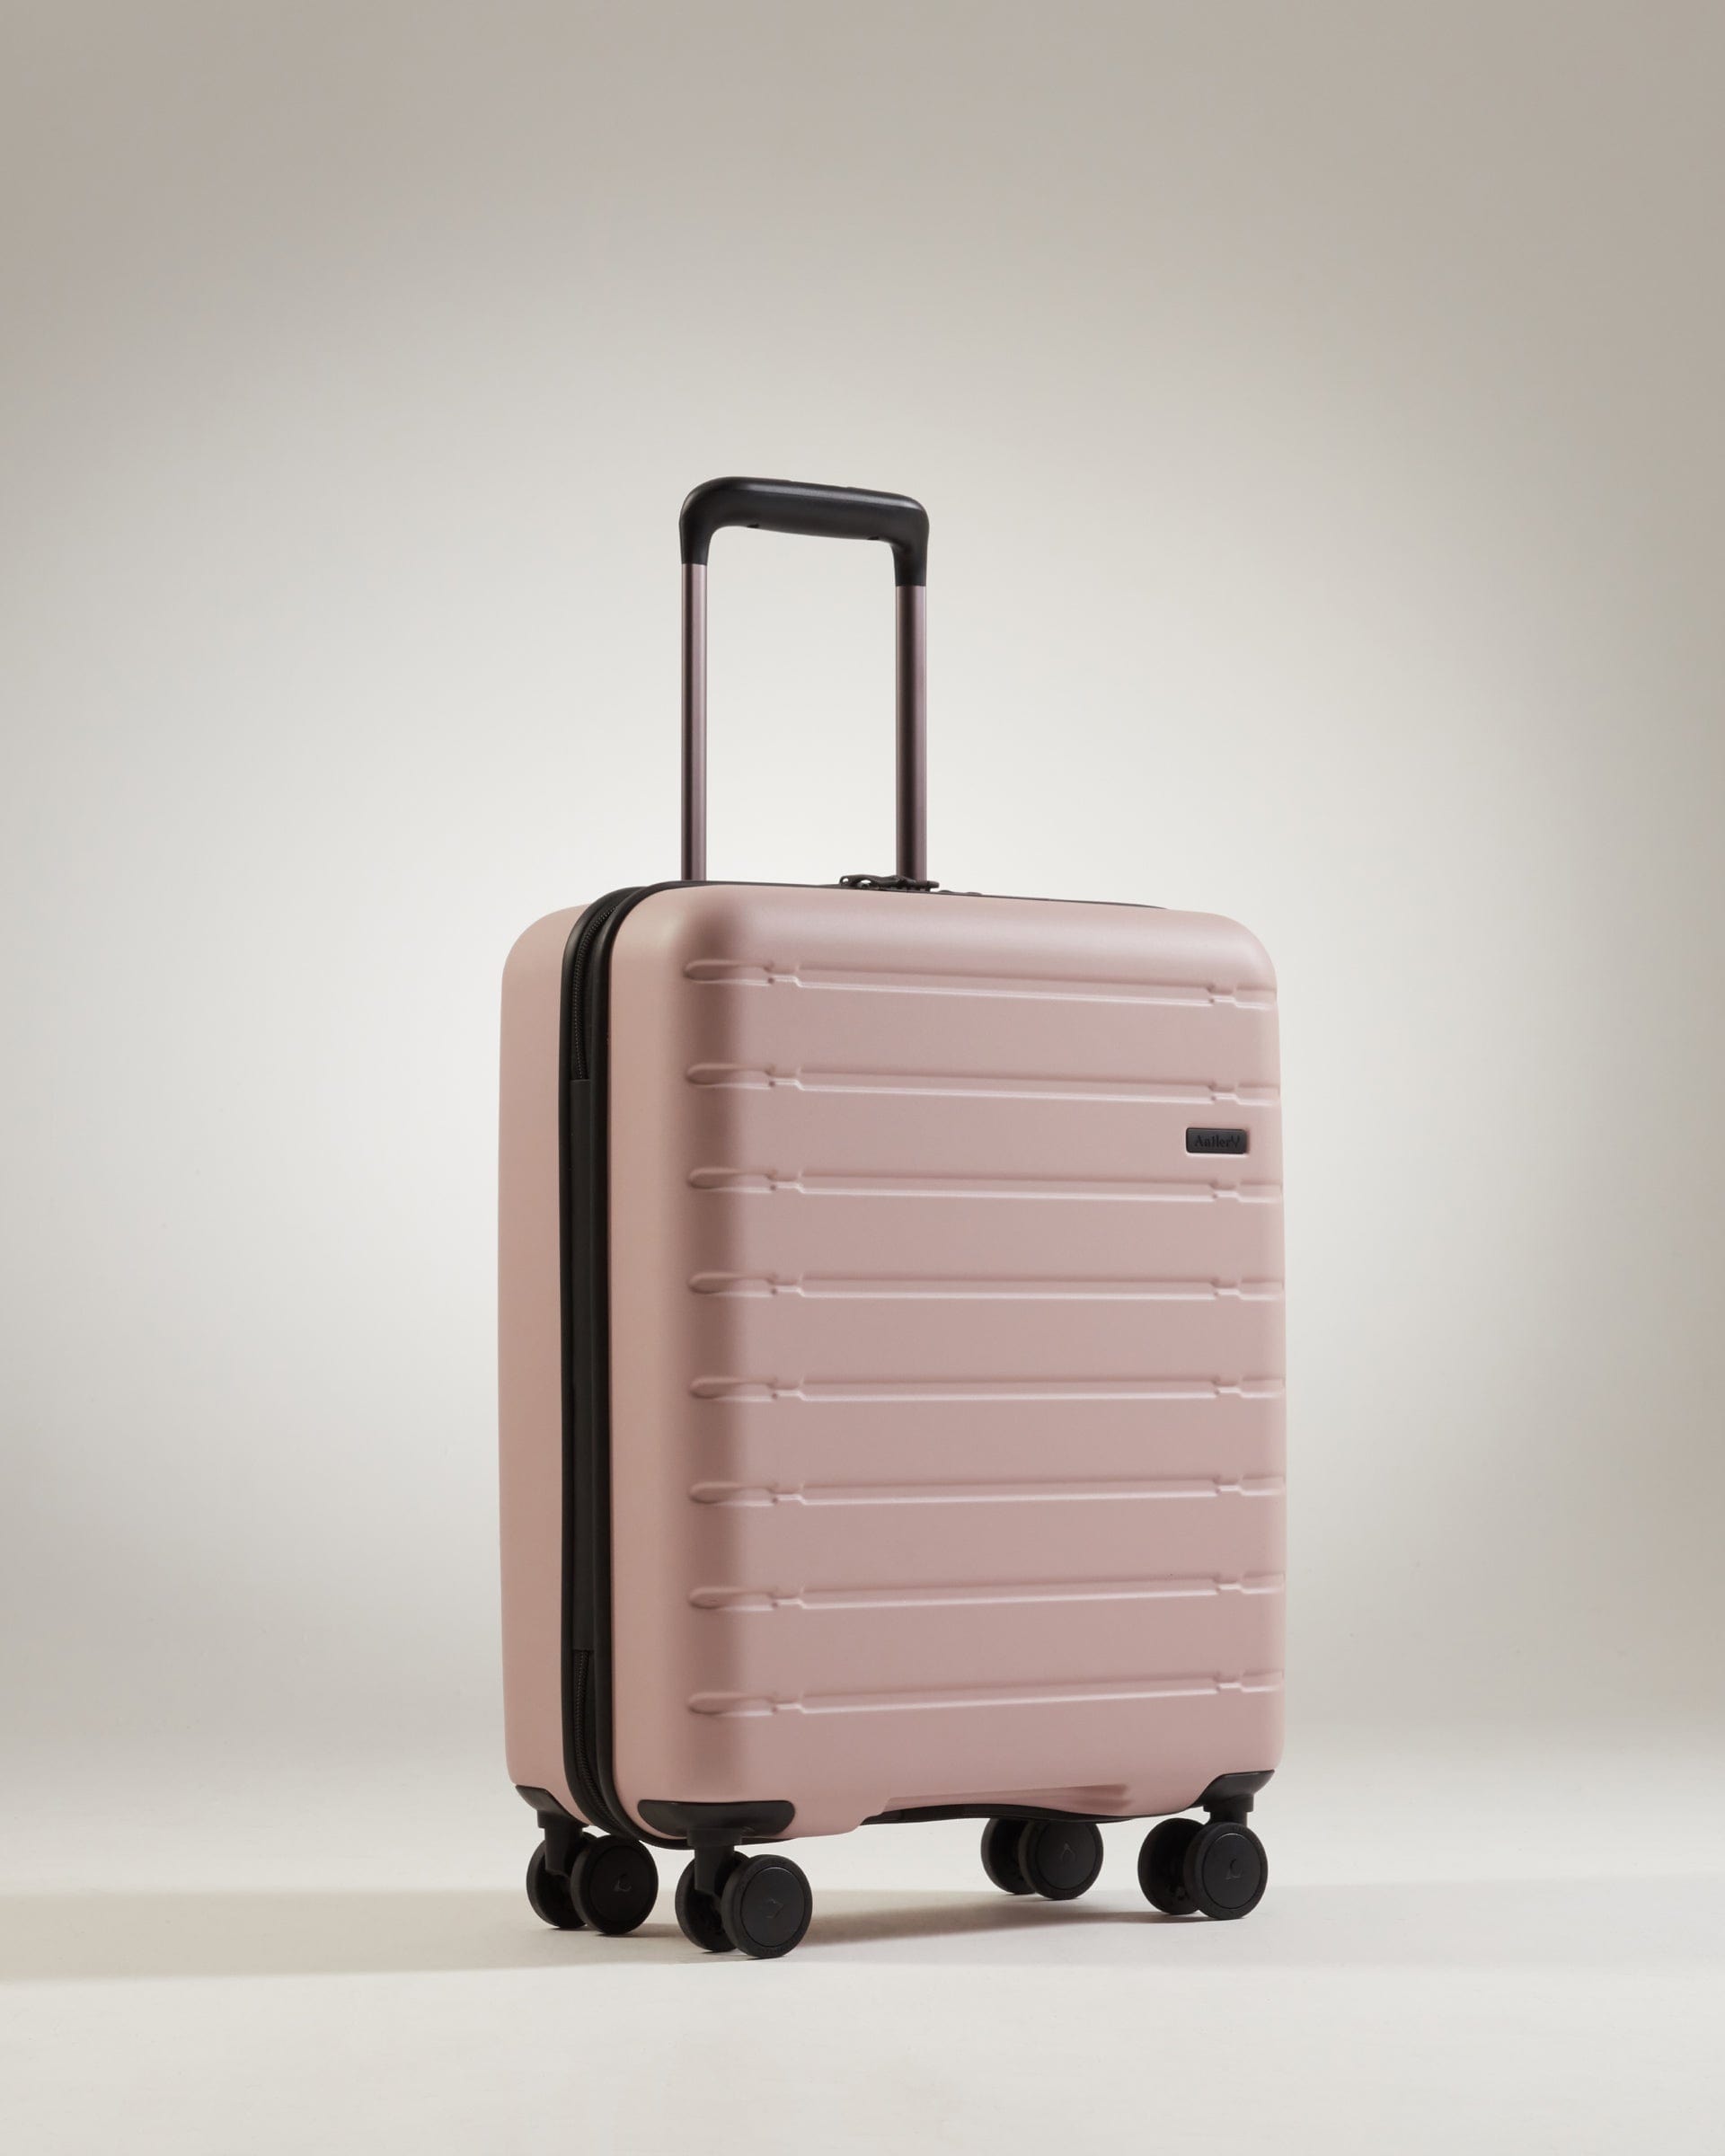 View Antler Stamford Cabin Suitcase In Putty Size 20cm x 402cm x 541cm information